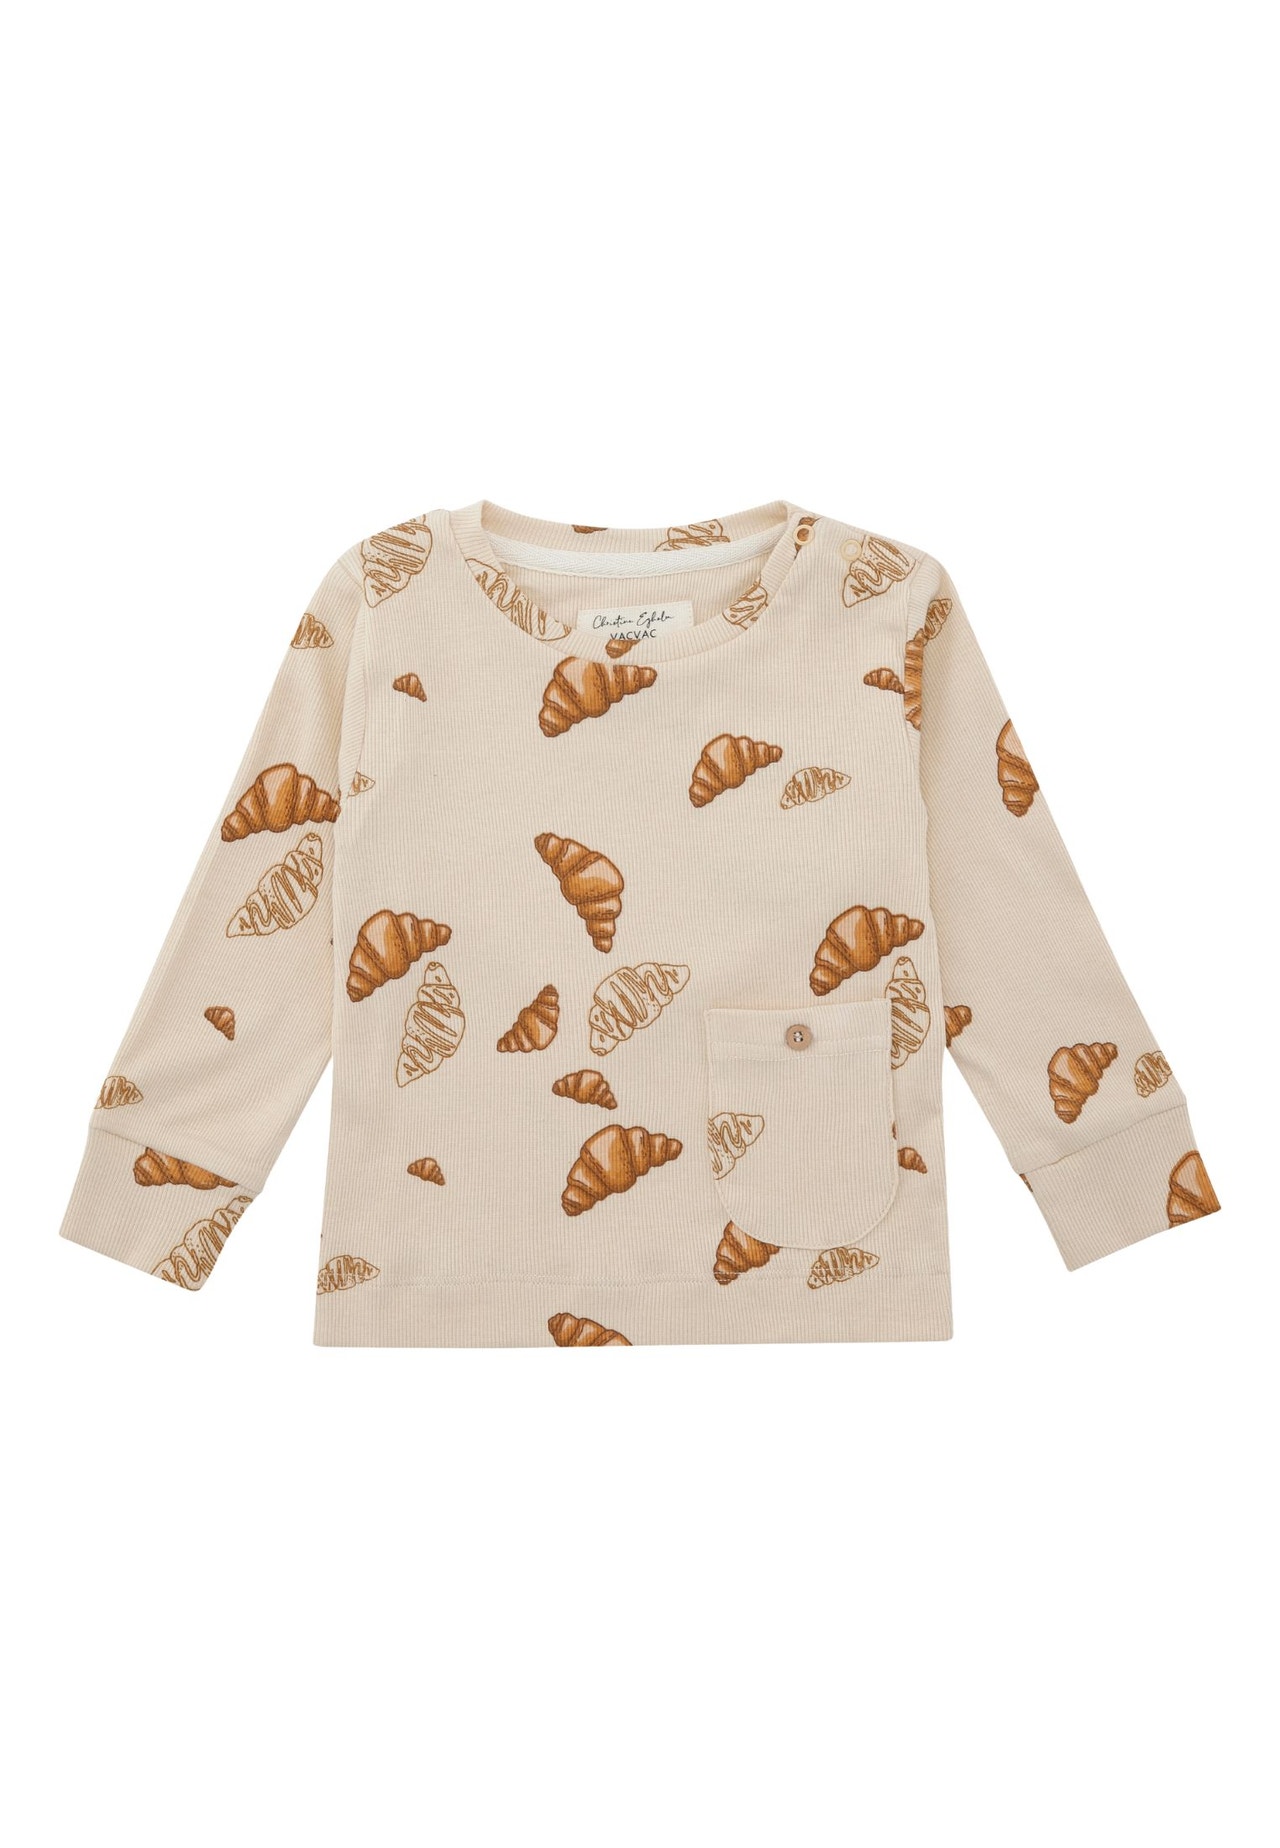 MAMA.LICIOUS vacvac ELLO blouse -Croissant BIG AOP - 99999963